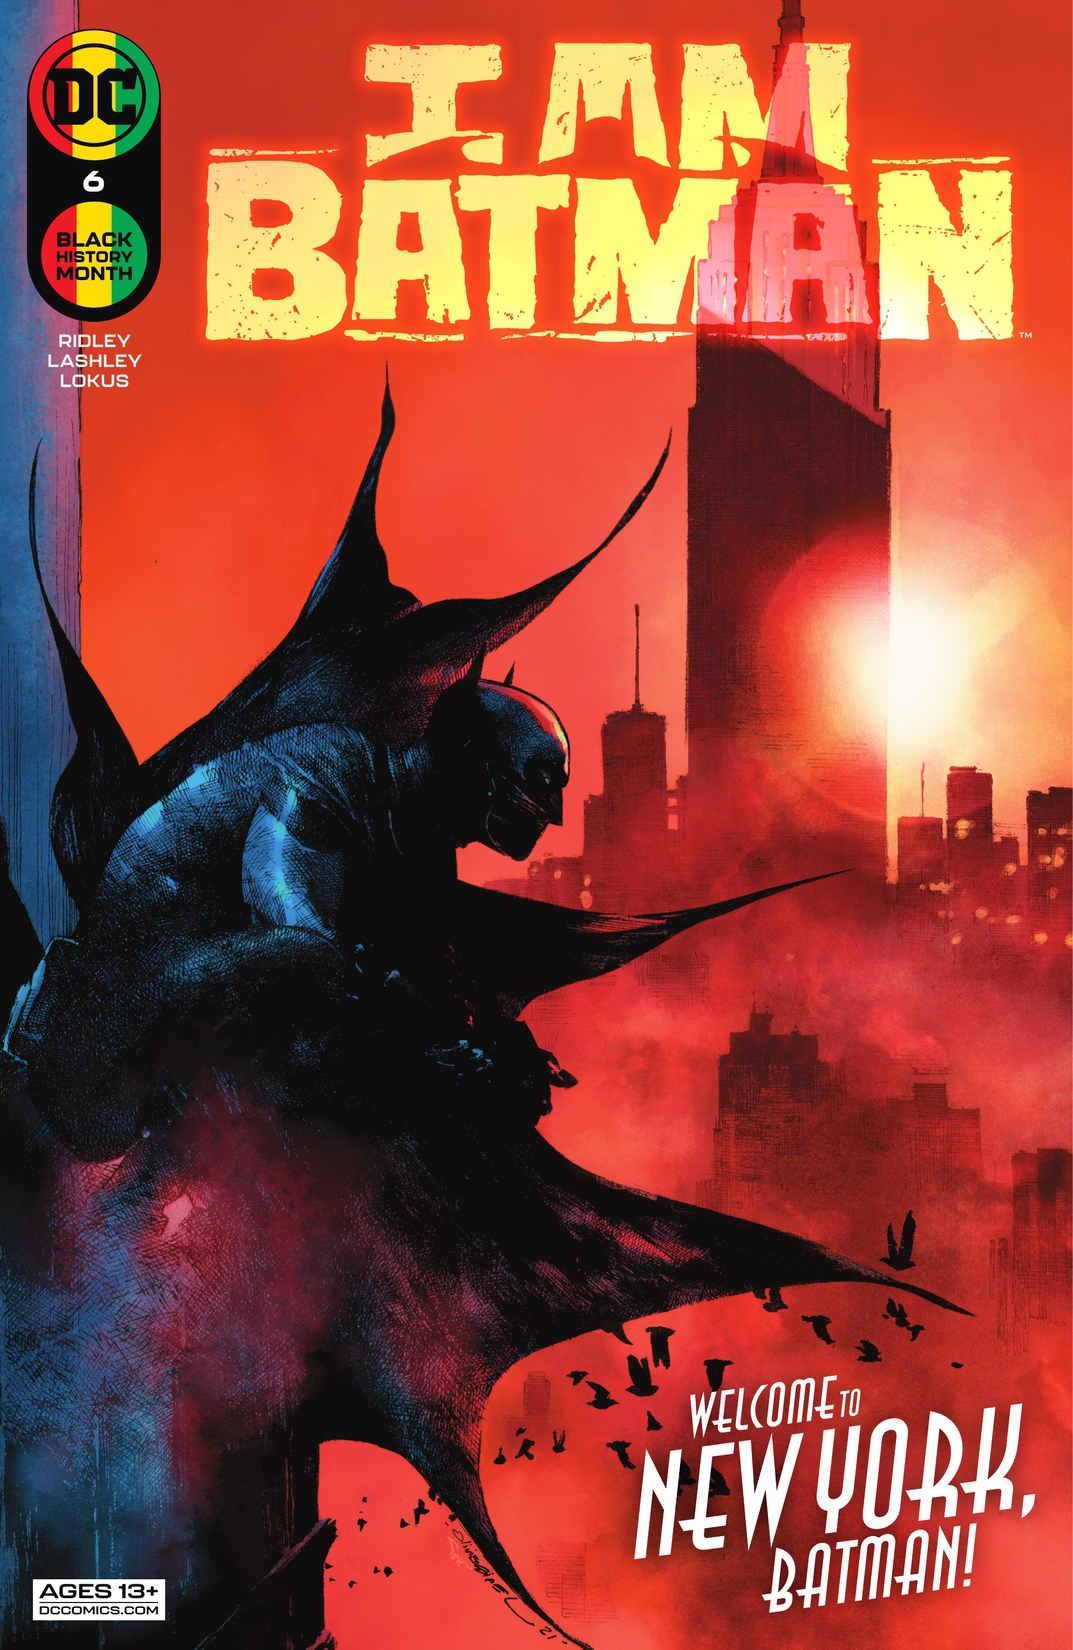 I Am Batman #6 preview images